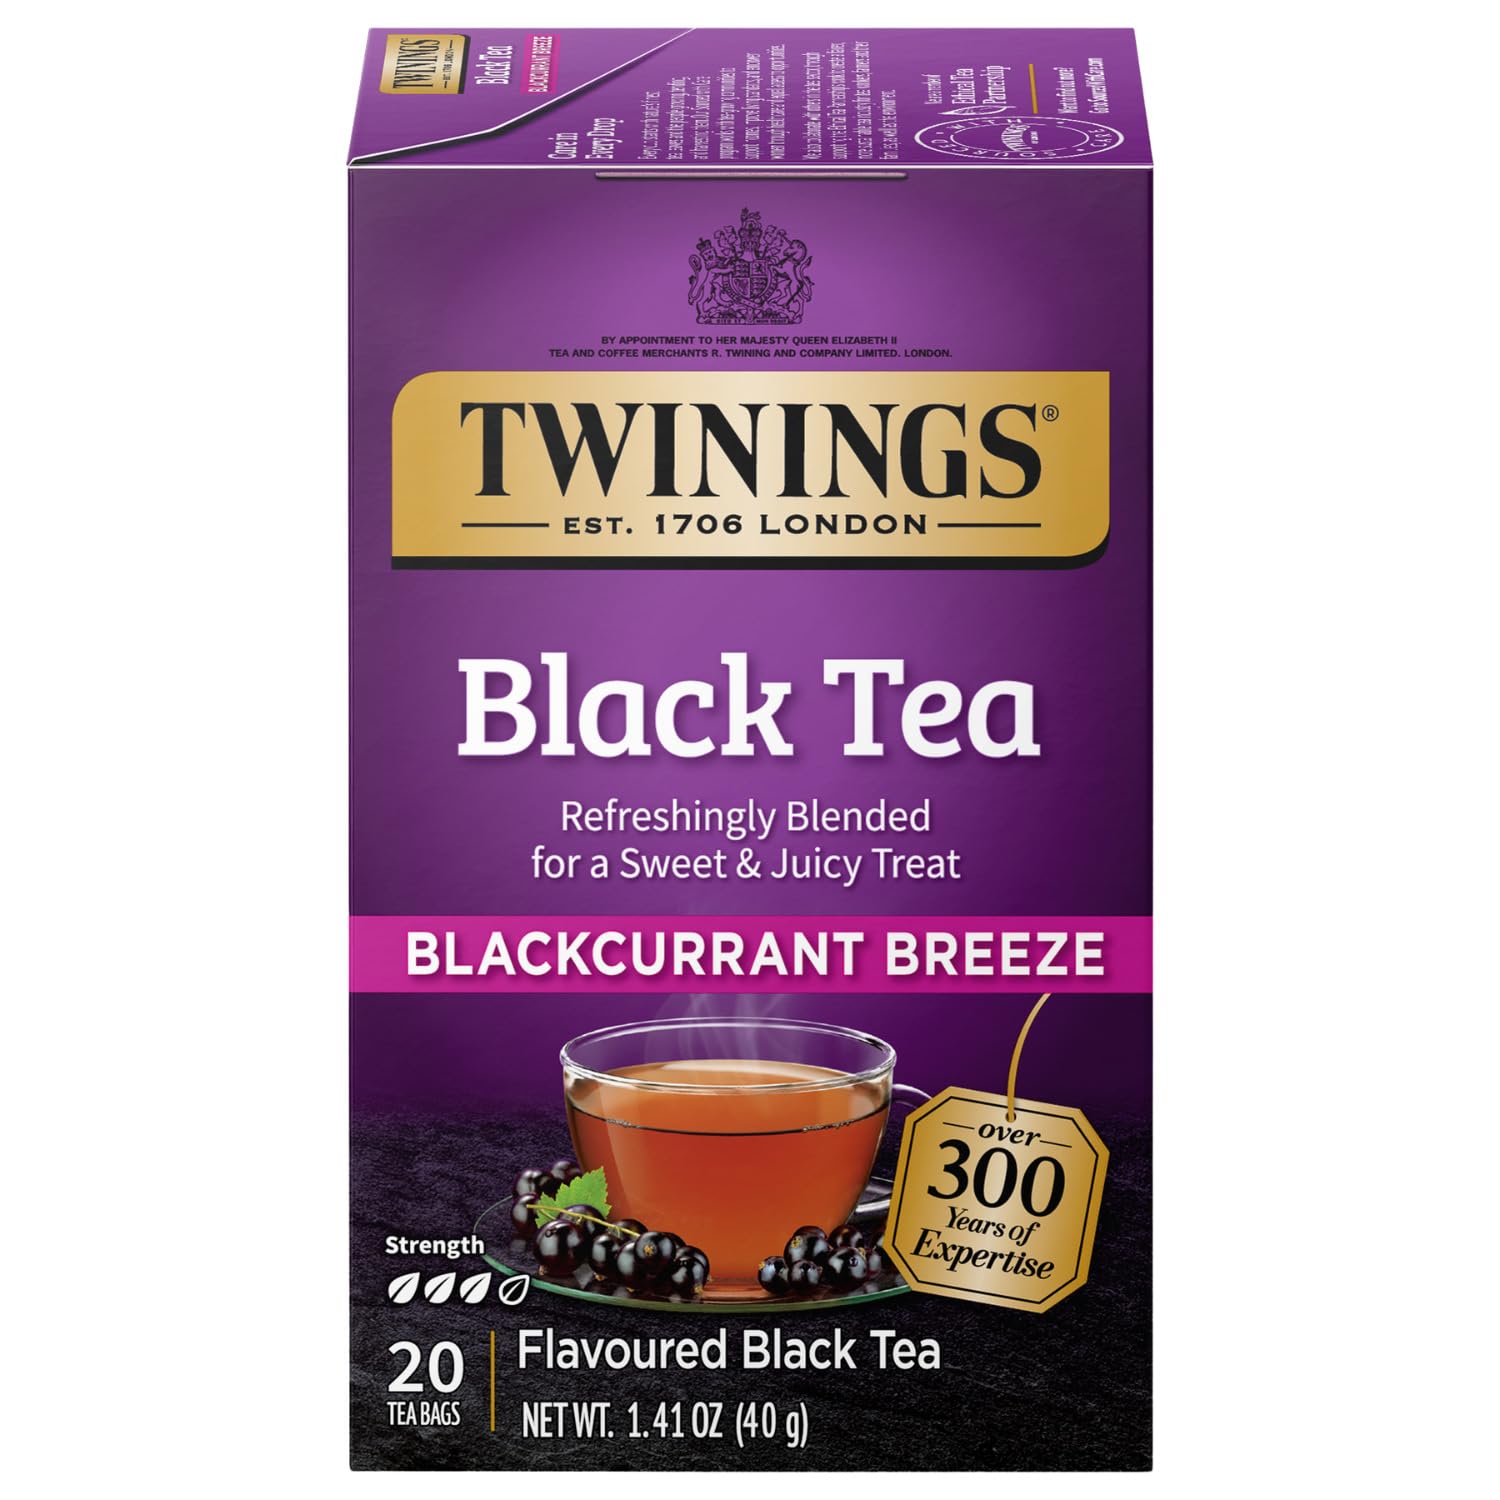 Twinings of London Premium Blackcurrant Breeze Black Tea, Strong and Distinctive Black Tea, Sweet and Tangy Black Currant Tea Taste, 20 Tea Bags